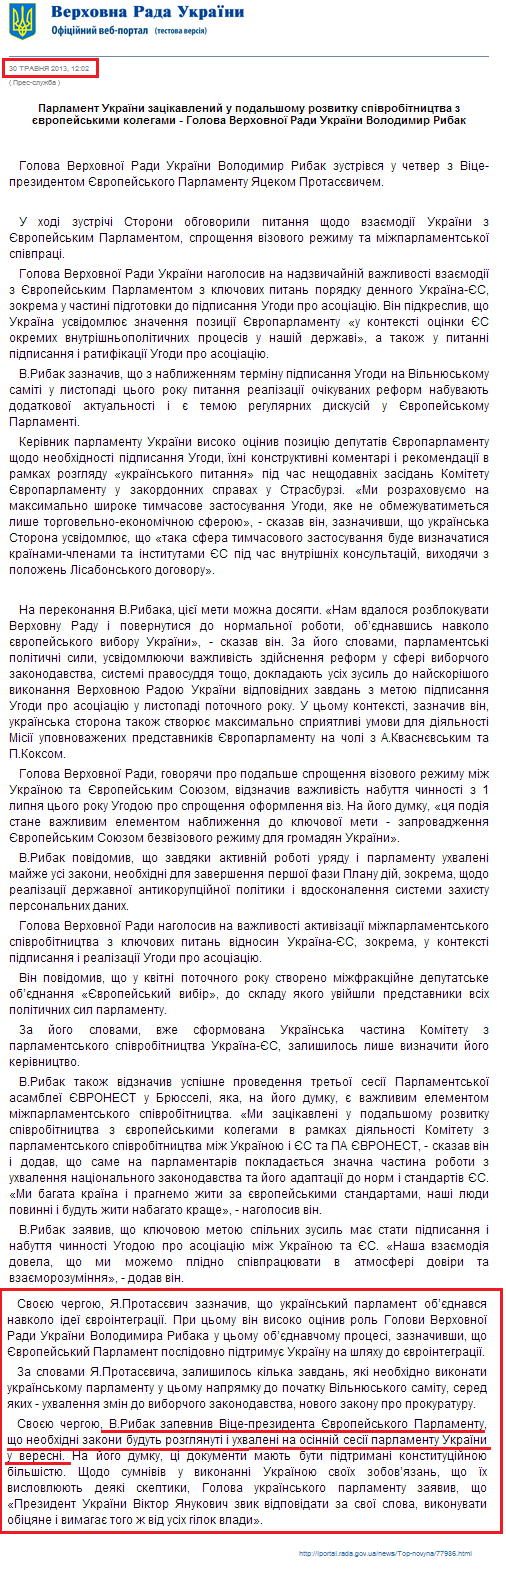 http://iportal.rada.gov.ua/news/Top-novyna/77986.html